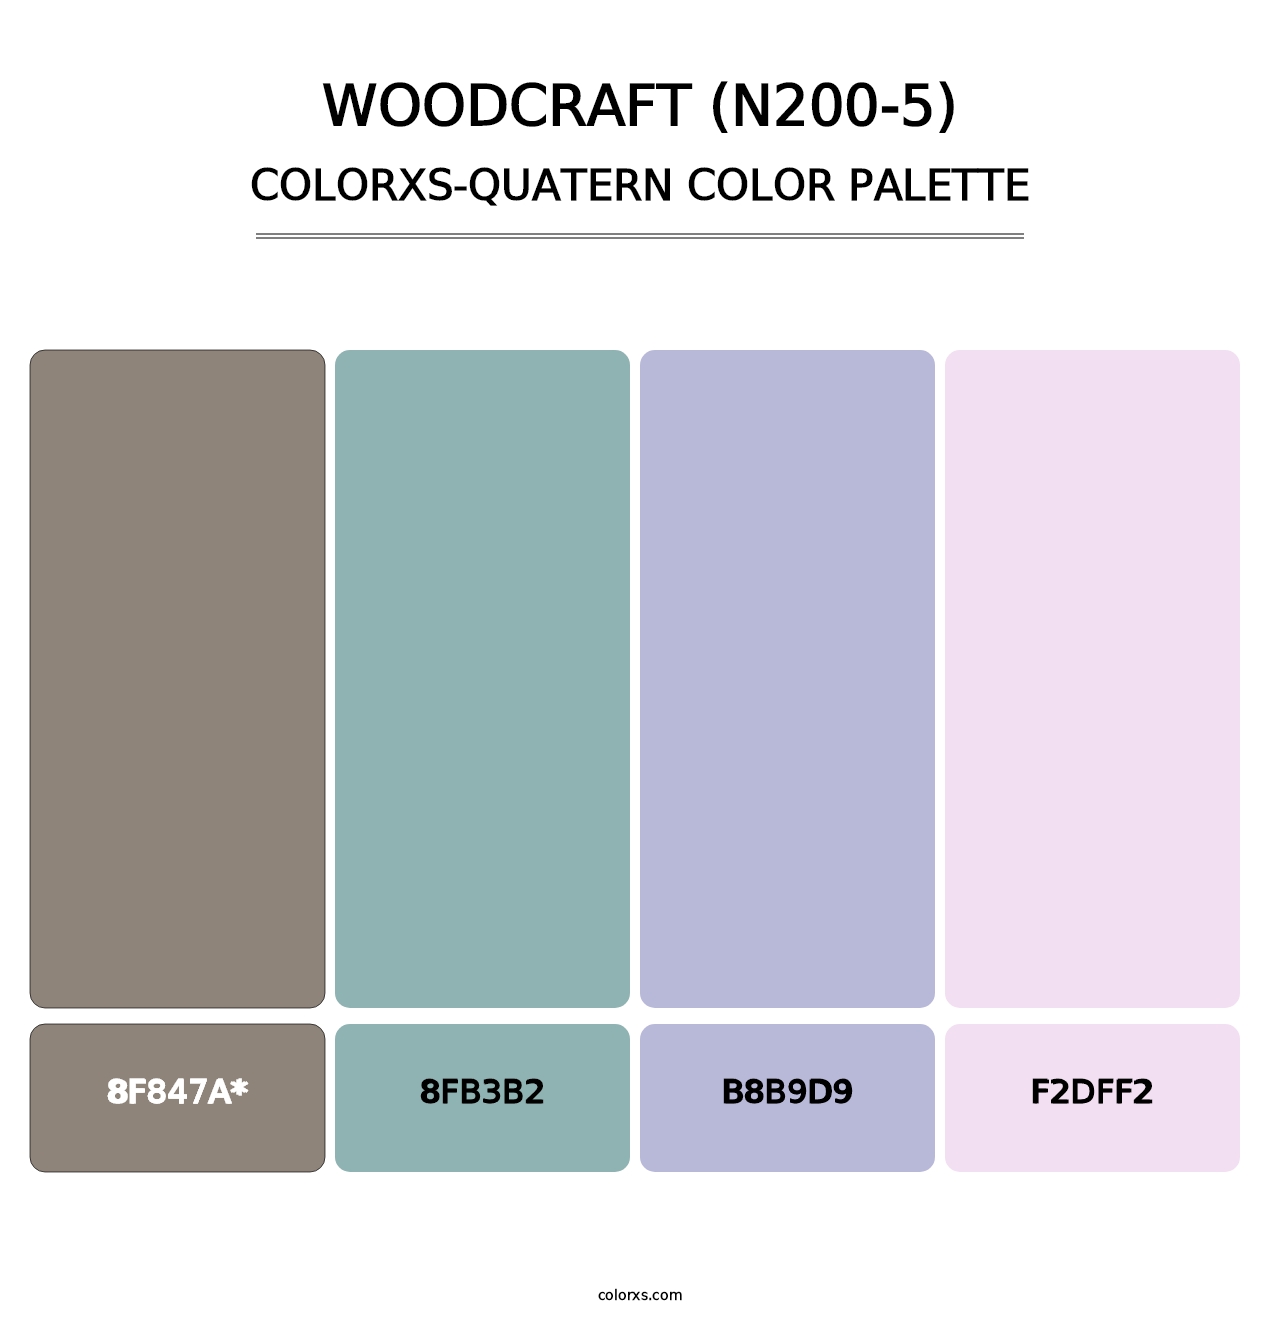 Woodcraft (N200-5) - Colorxs Quatern Palette